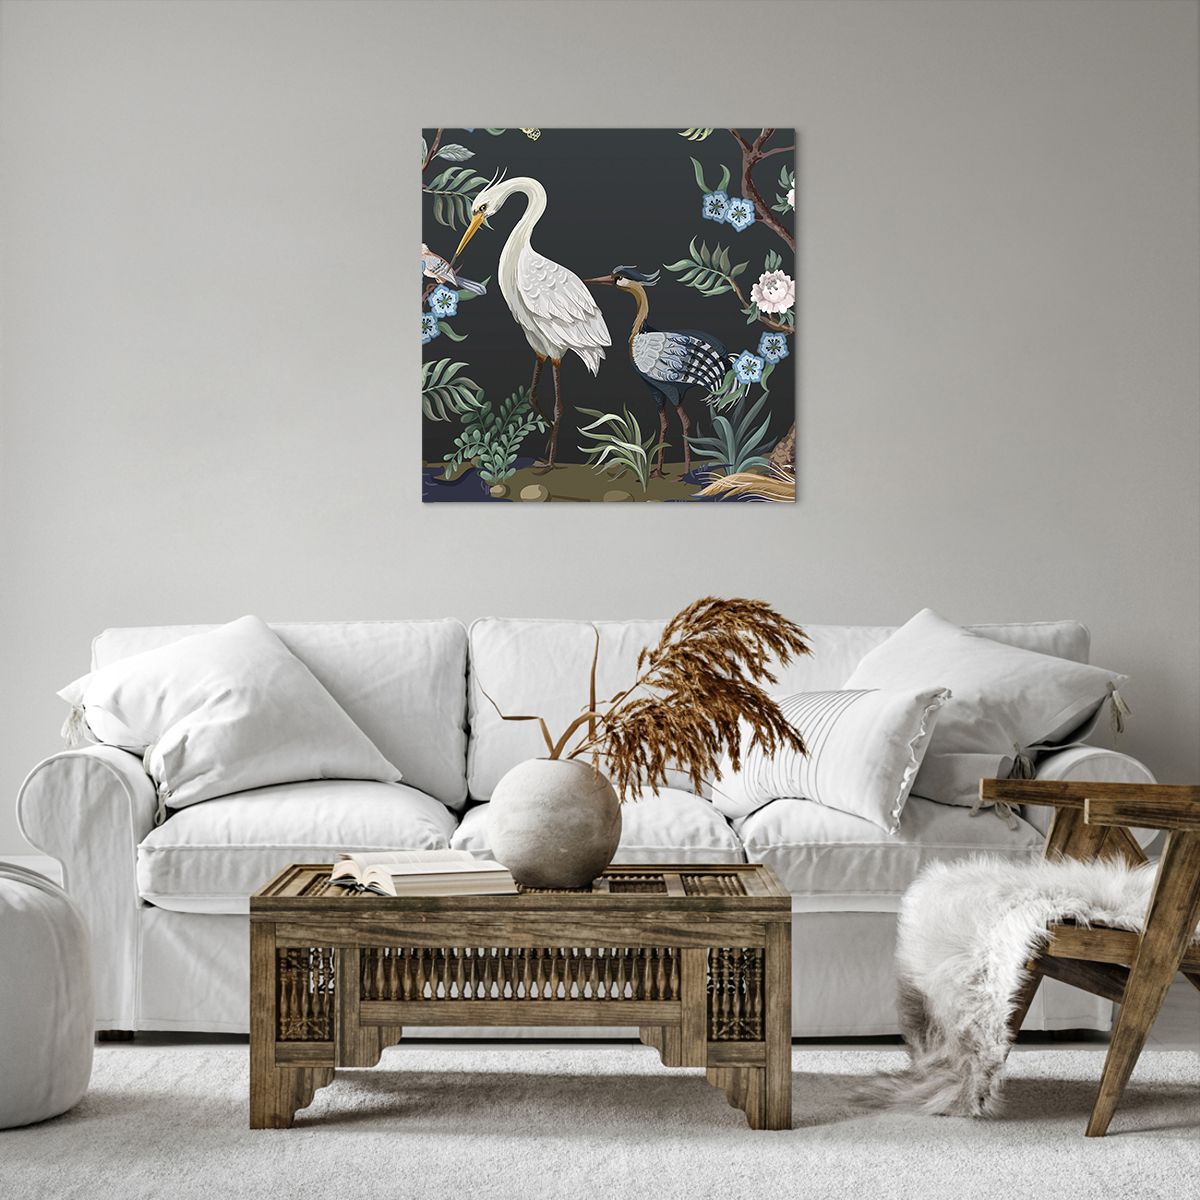 Cuadro sobre lienzo Animales, Cuadro sobre lienzo Flores, Cuadro sobre lienzo Pájaro, Cuadro sobre lienzo Asia, Cuadro sobre lienzo Arte